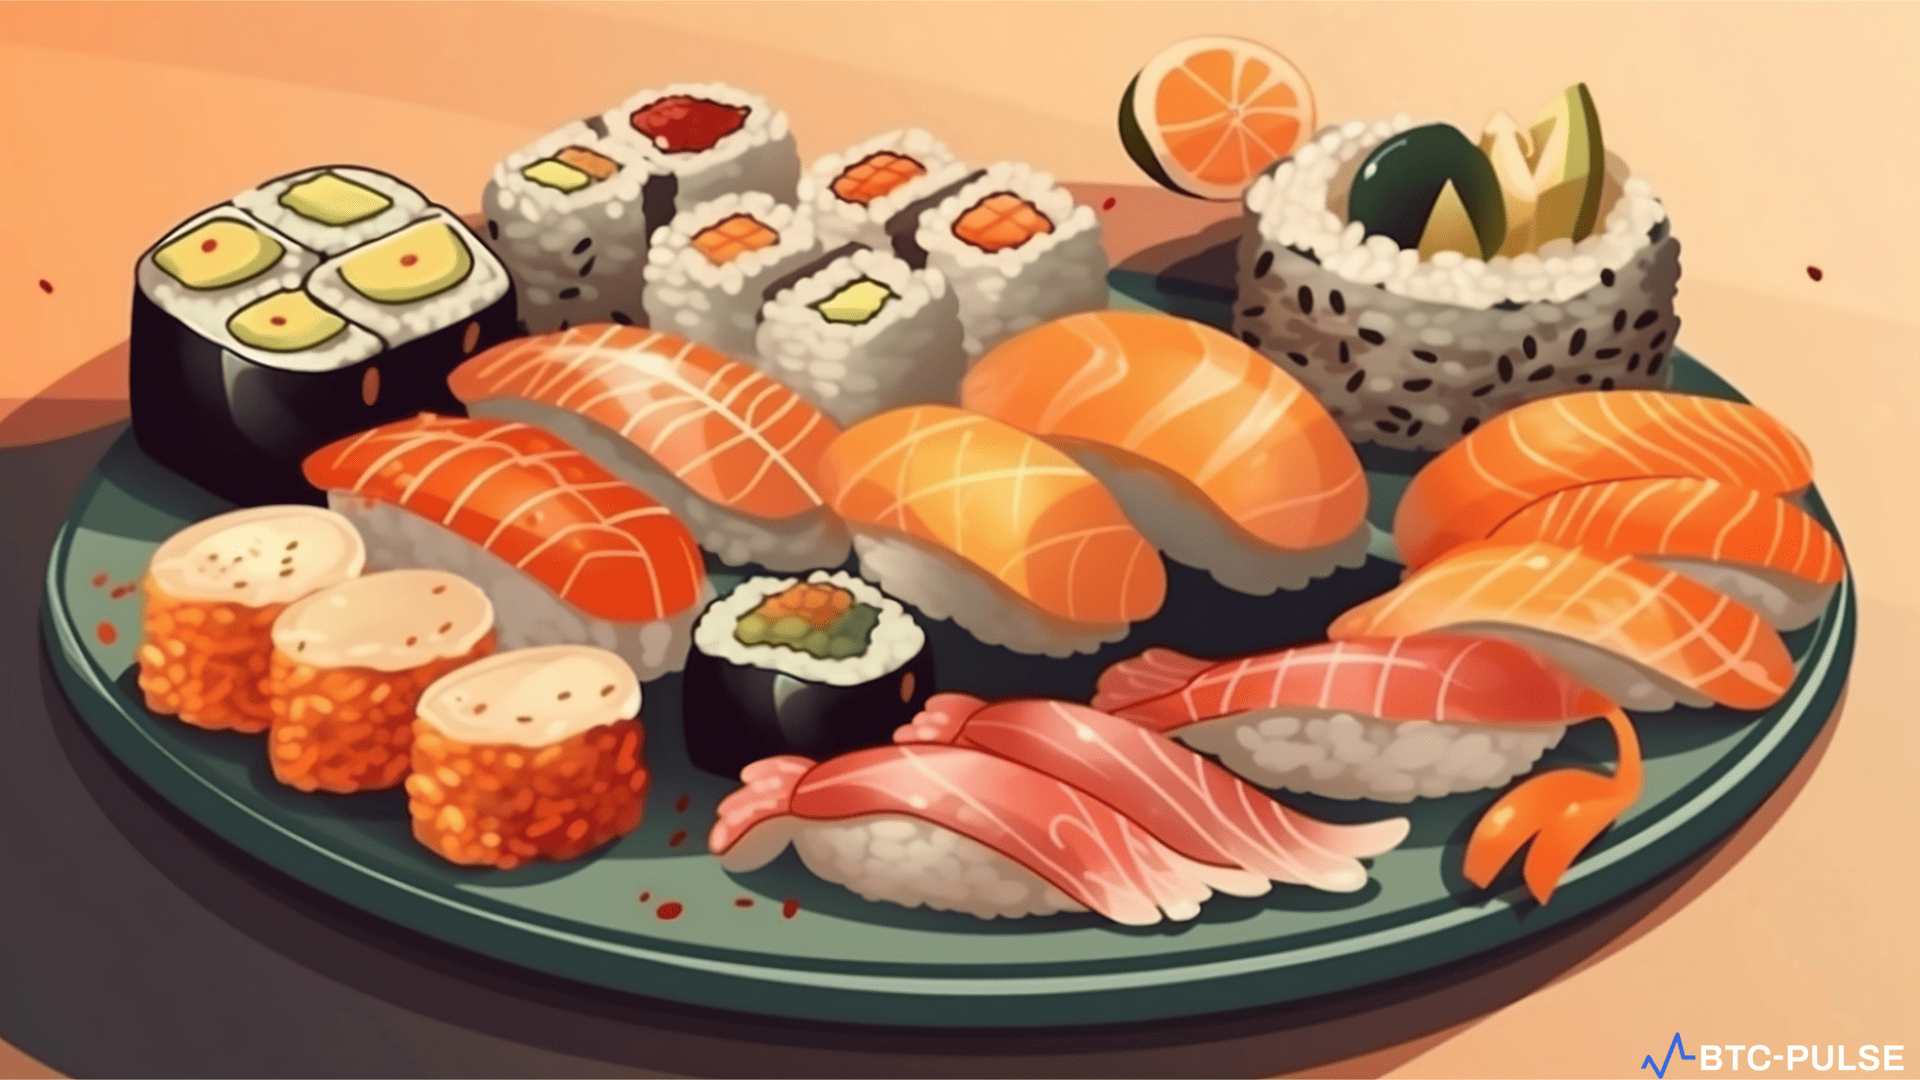 Illustration of the Sushi and Aptos logos symbolizing their partnership in blockchain technology.